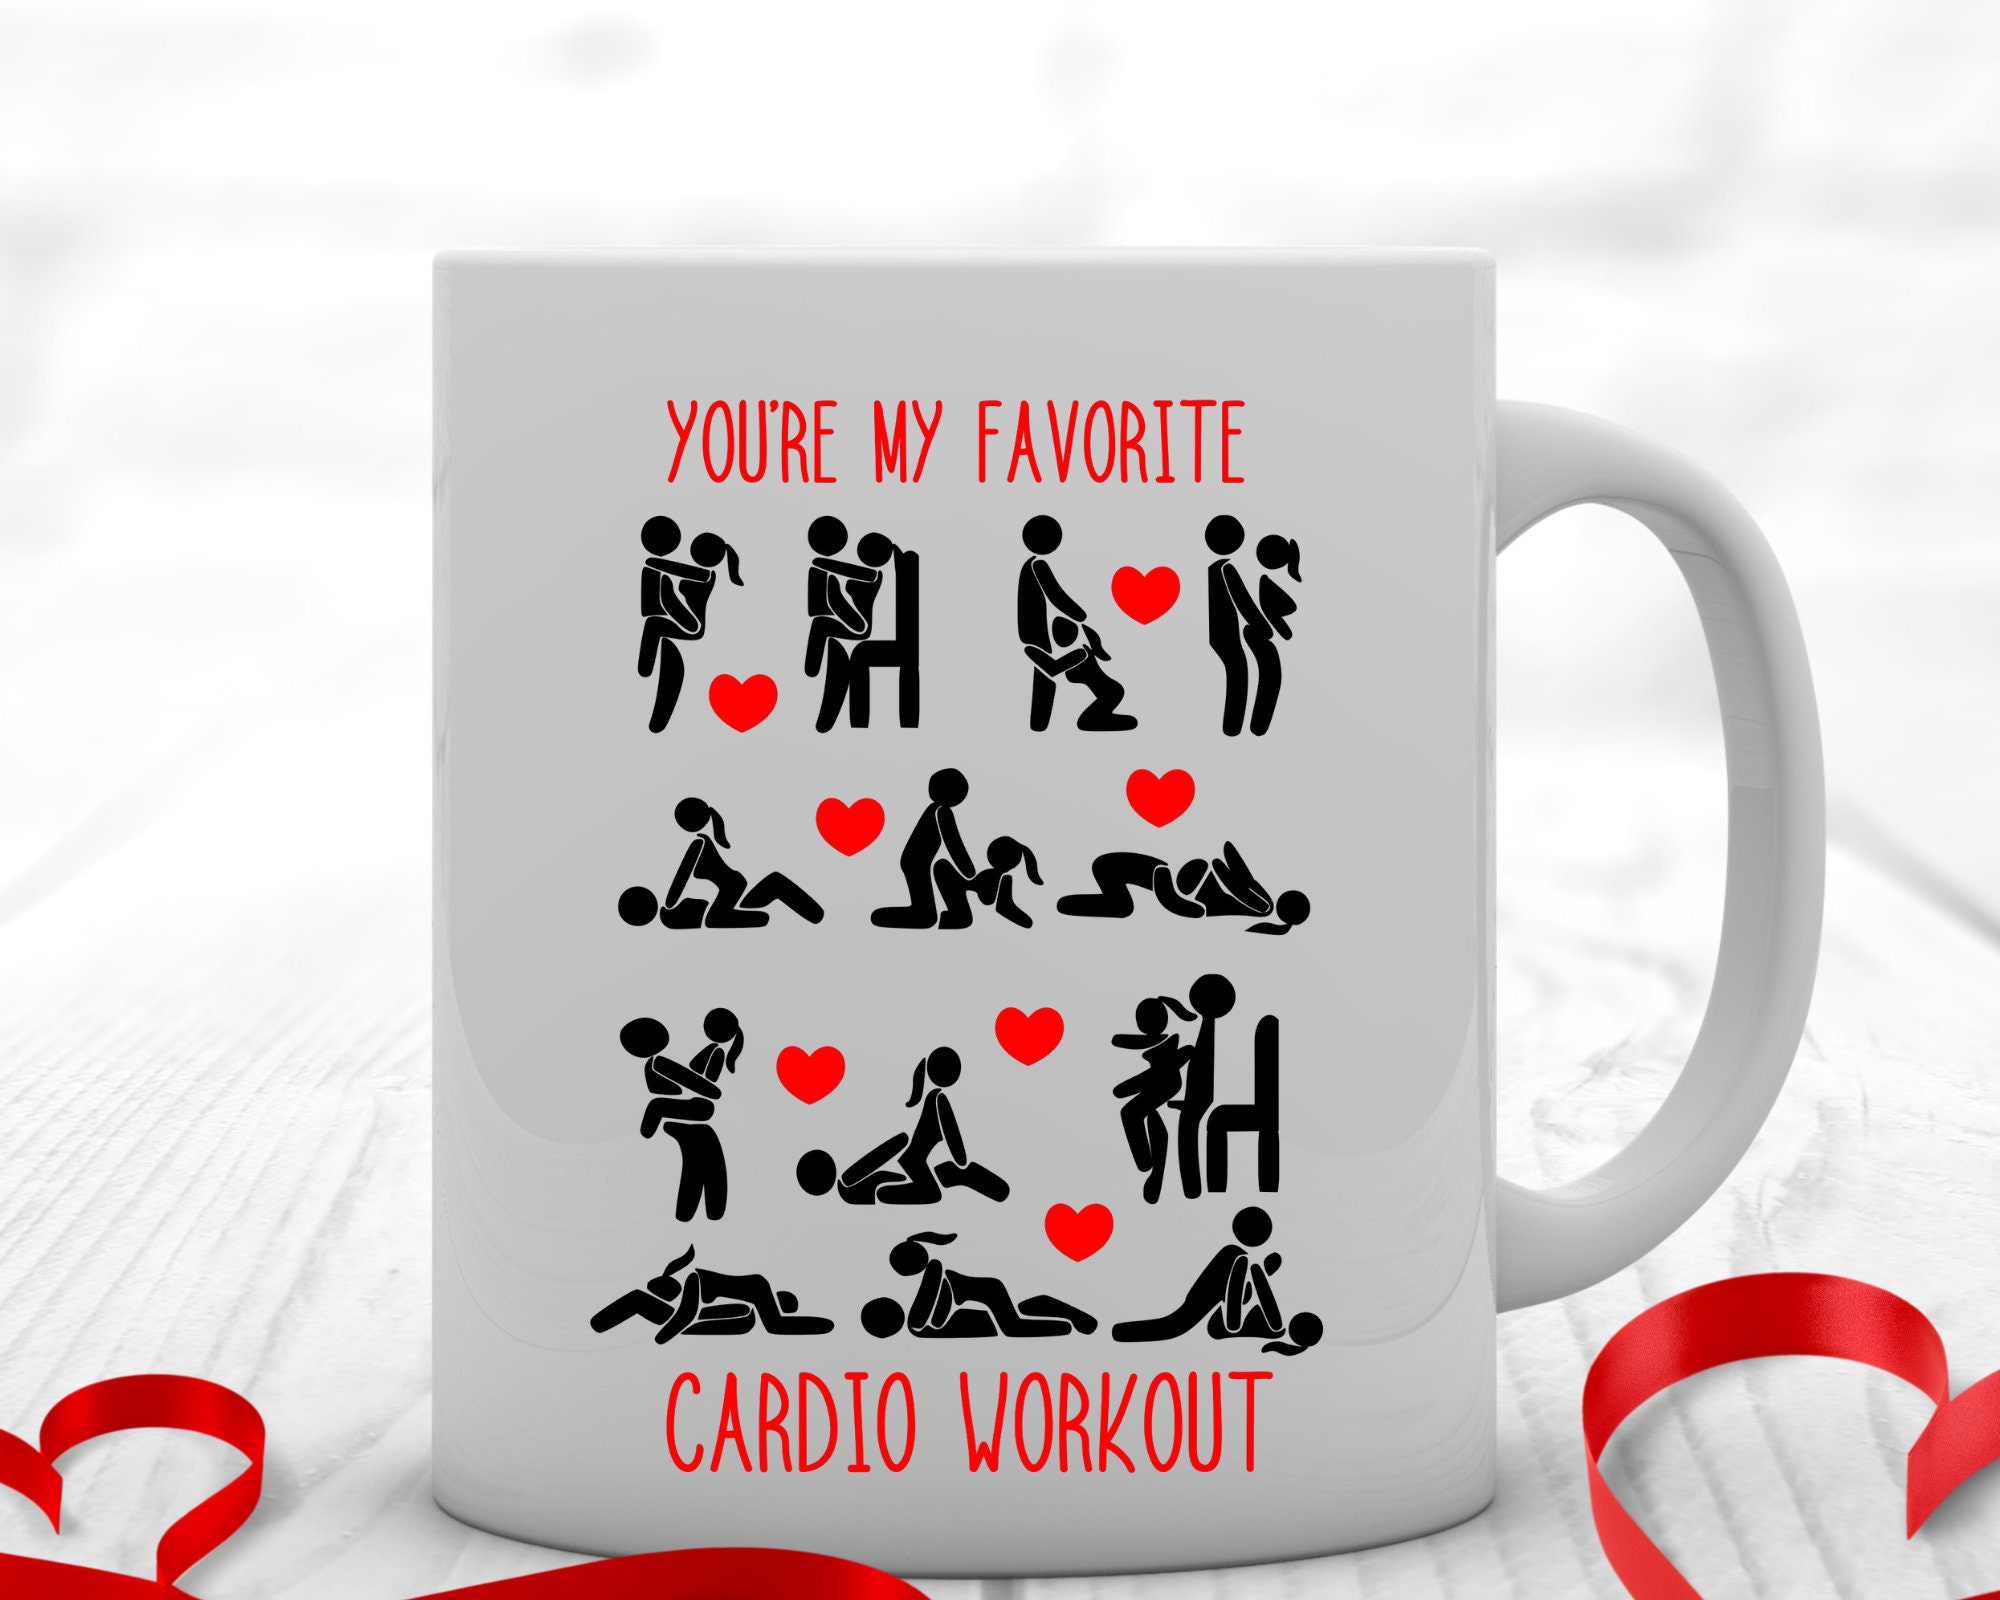 Youre my favorite cardio workout coffee mug,Youre my favorite cardio workout mug,Valentines Day Coffee Mug,Gifts For Women And Men,11 OZ 